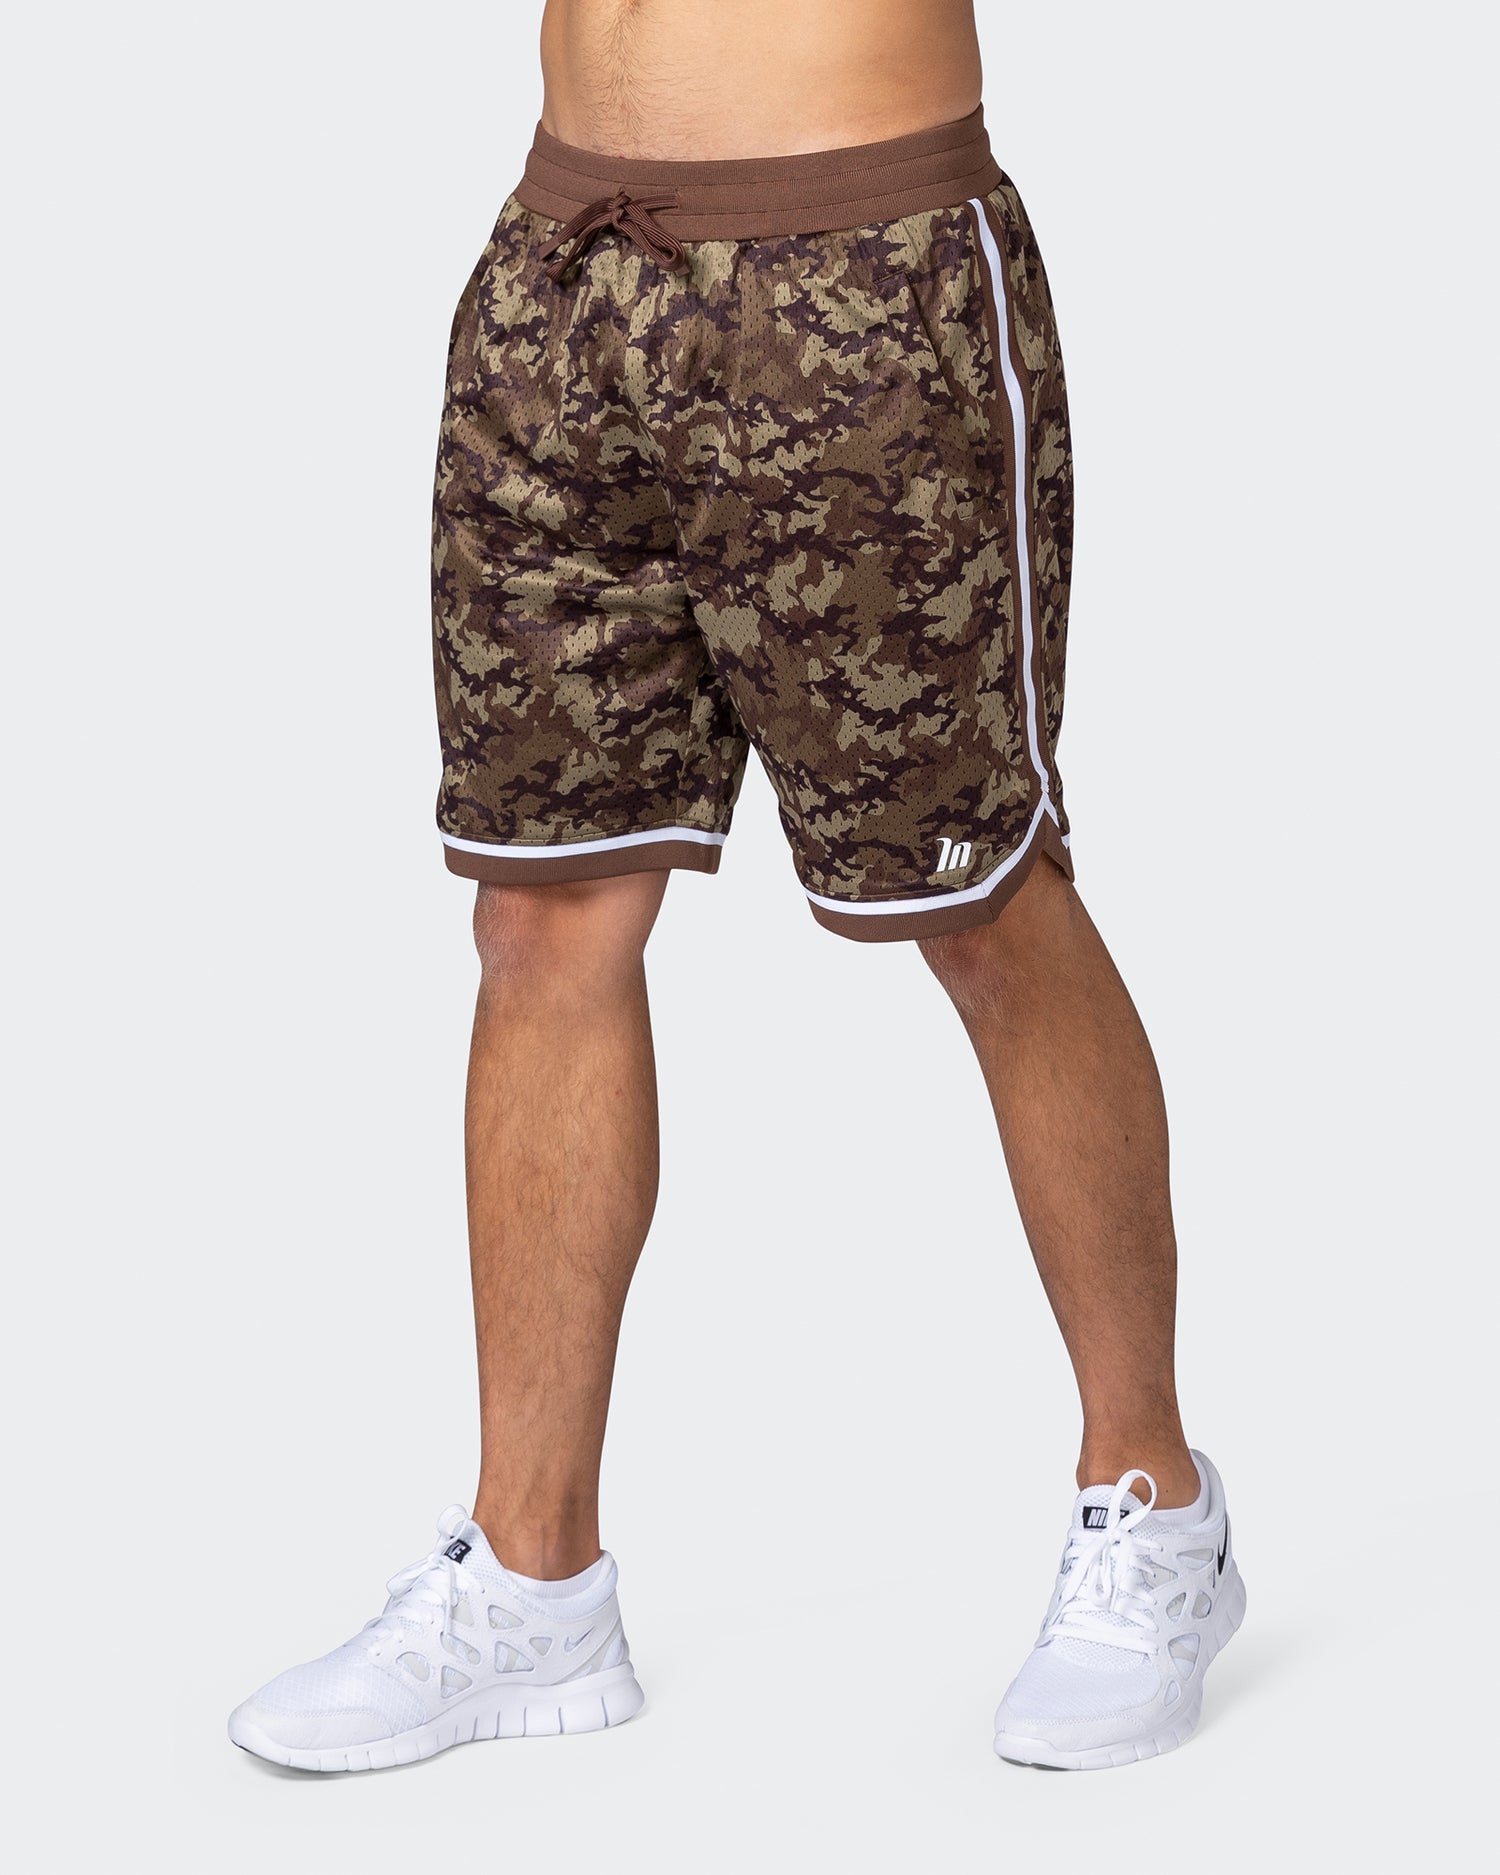 8" Basketball Shorts - Chestnut Camo Print